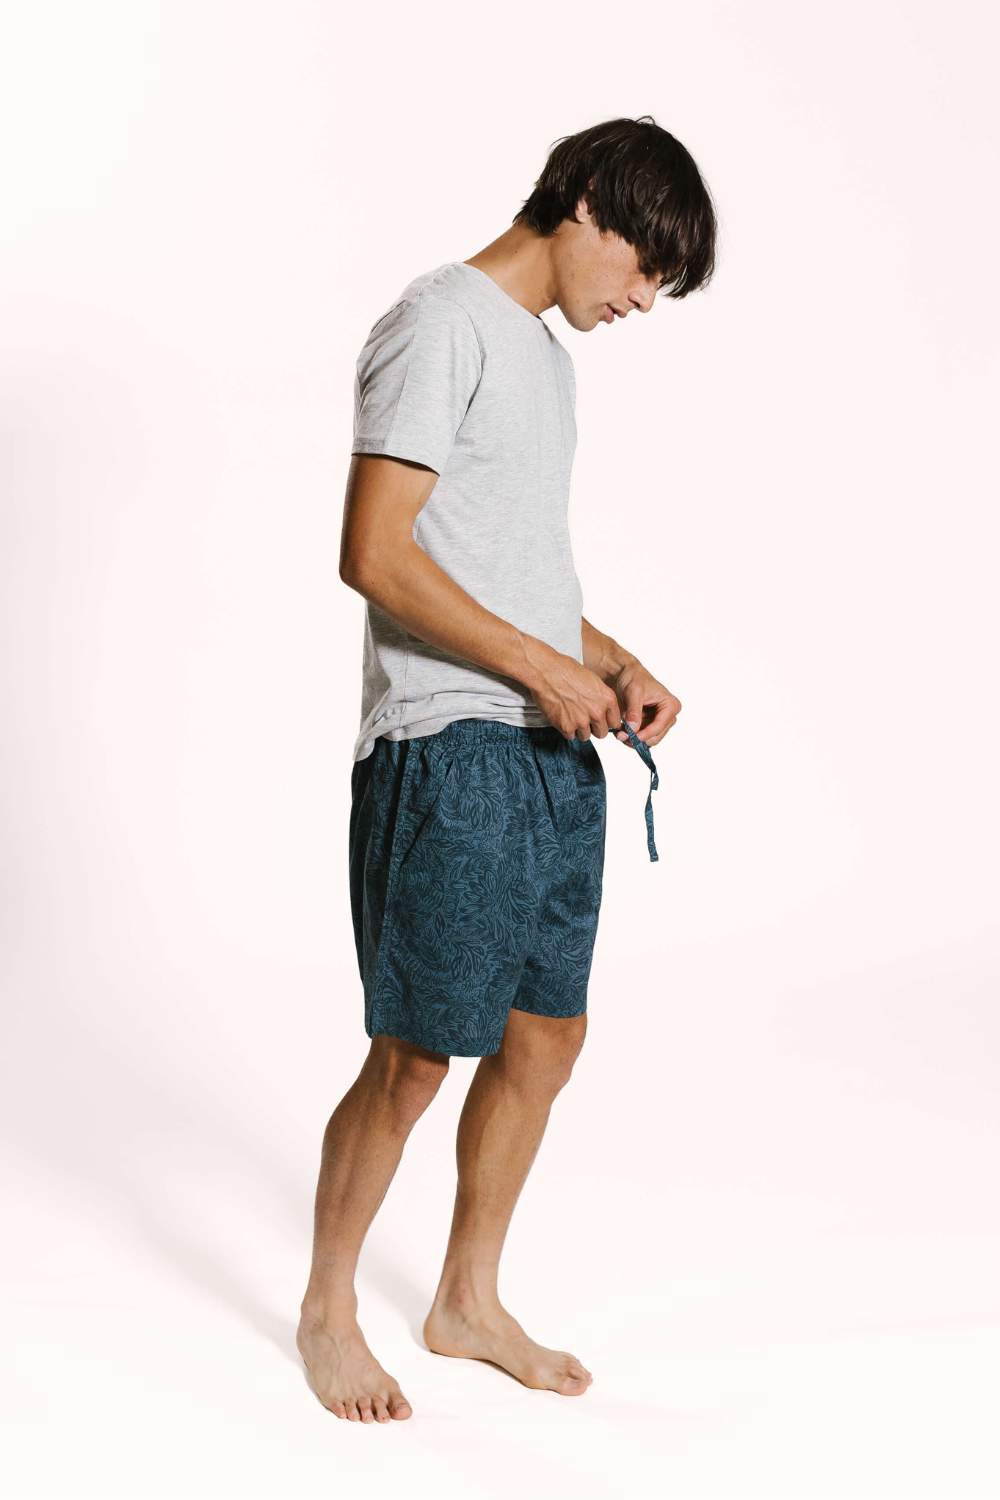 Mens sleepwear shorts in an organic cotton midnight garden print